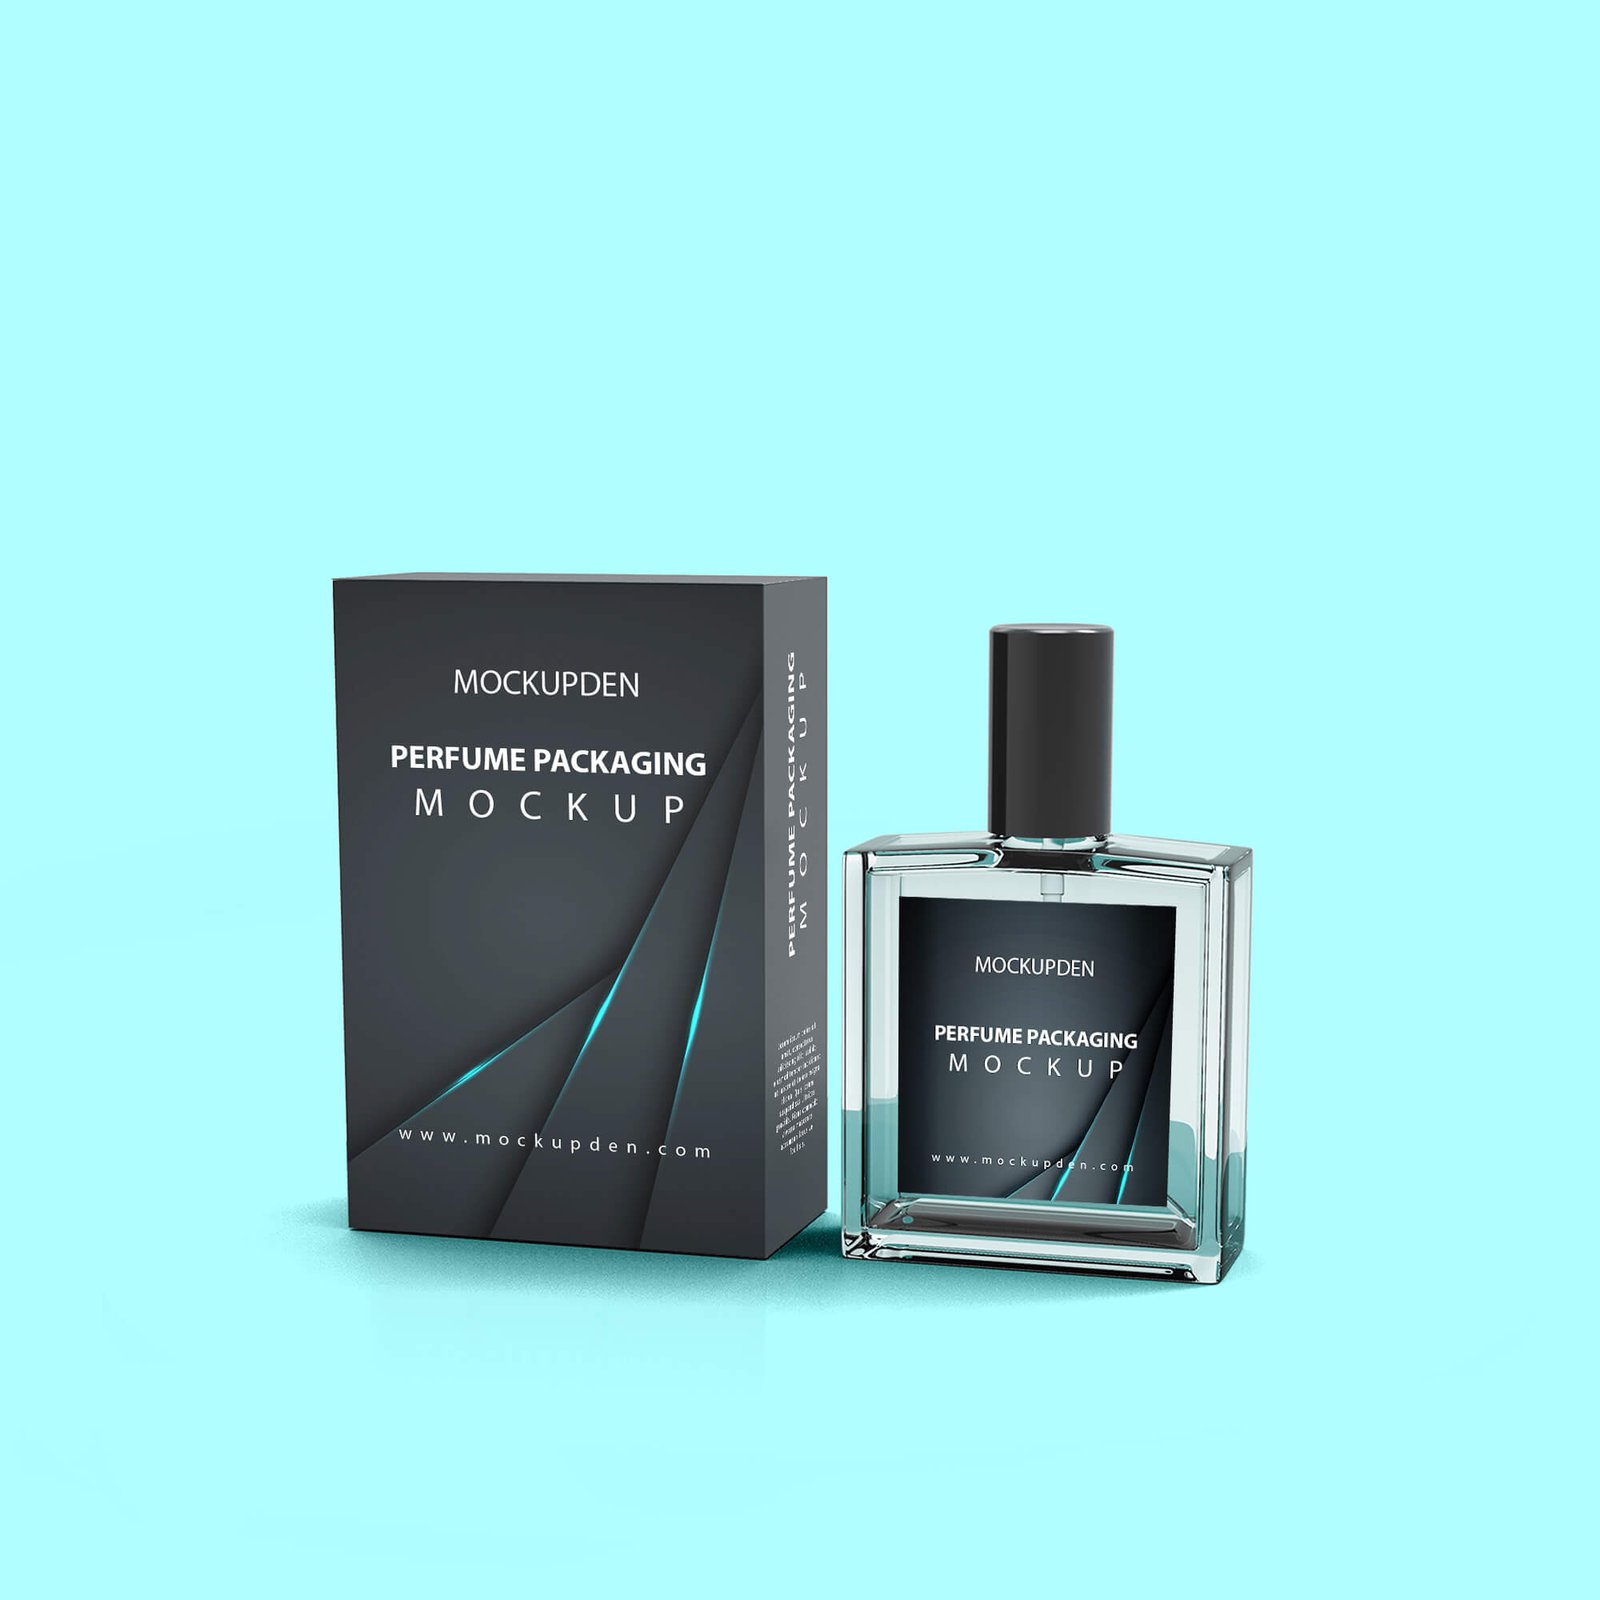 Design Free Perfume Packaging Mockup PSD Template